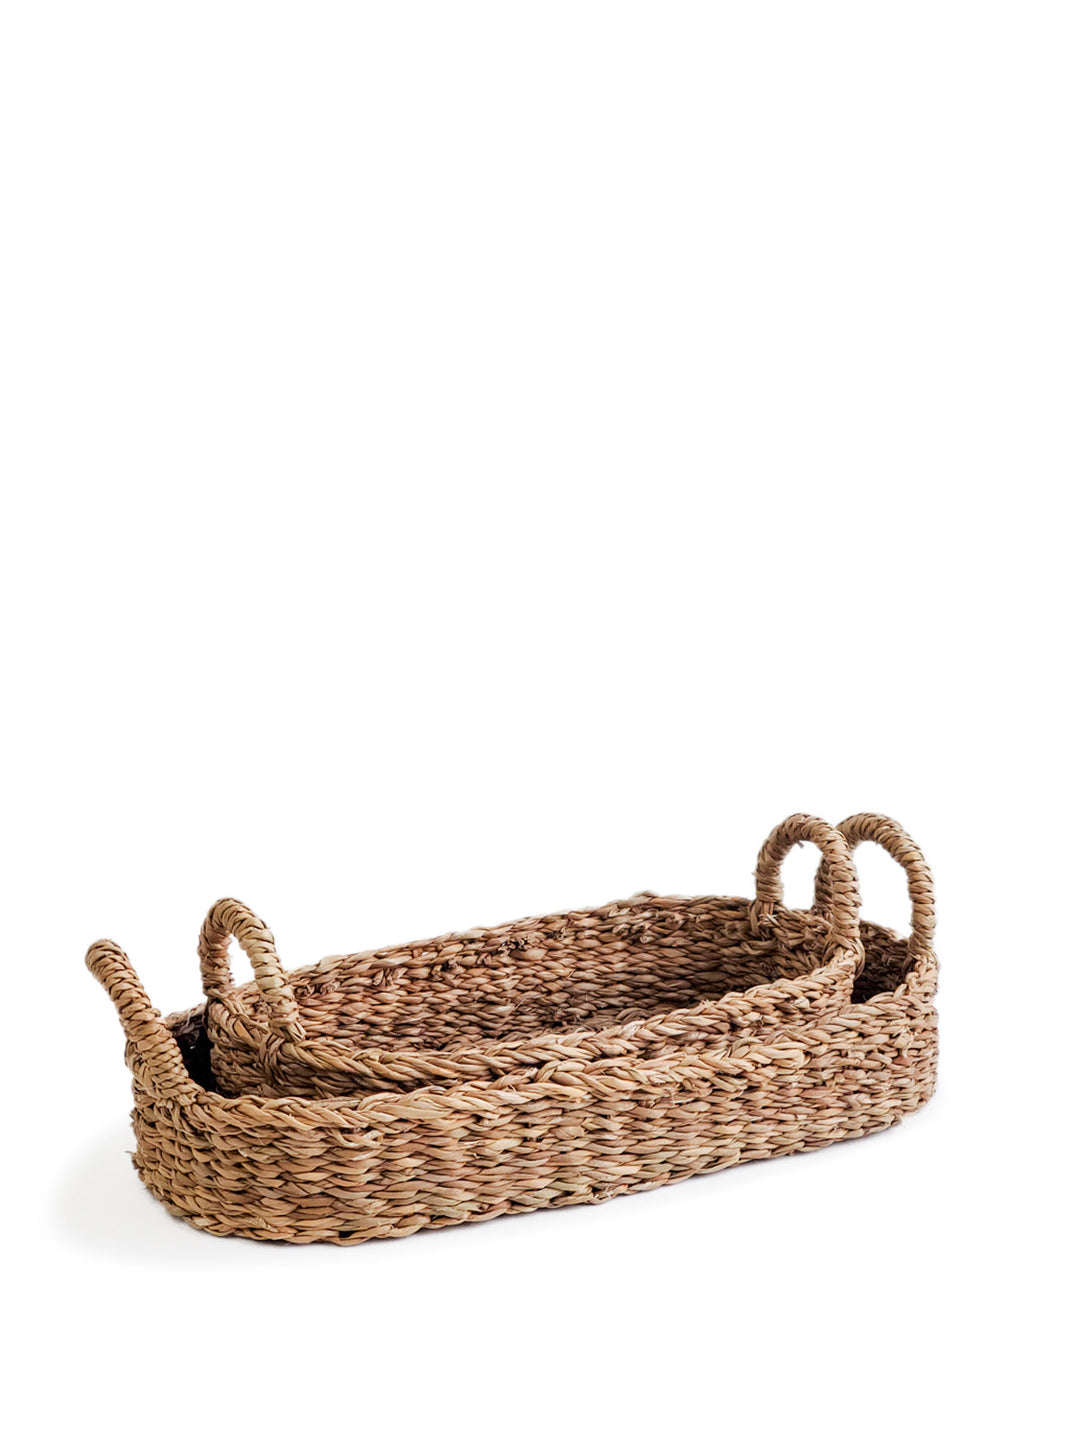 Savar Bread Basket with Natural Handle-6